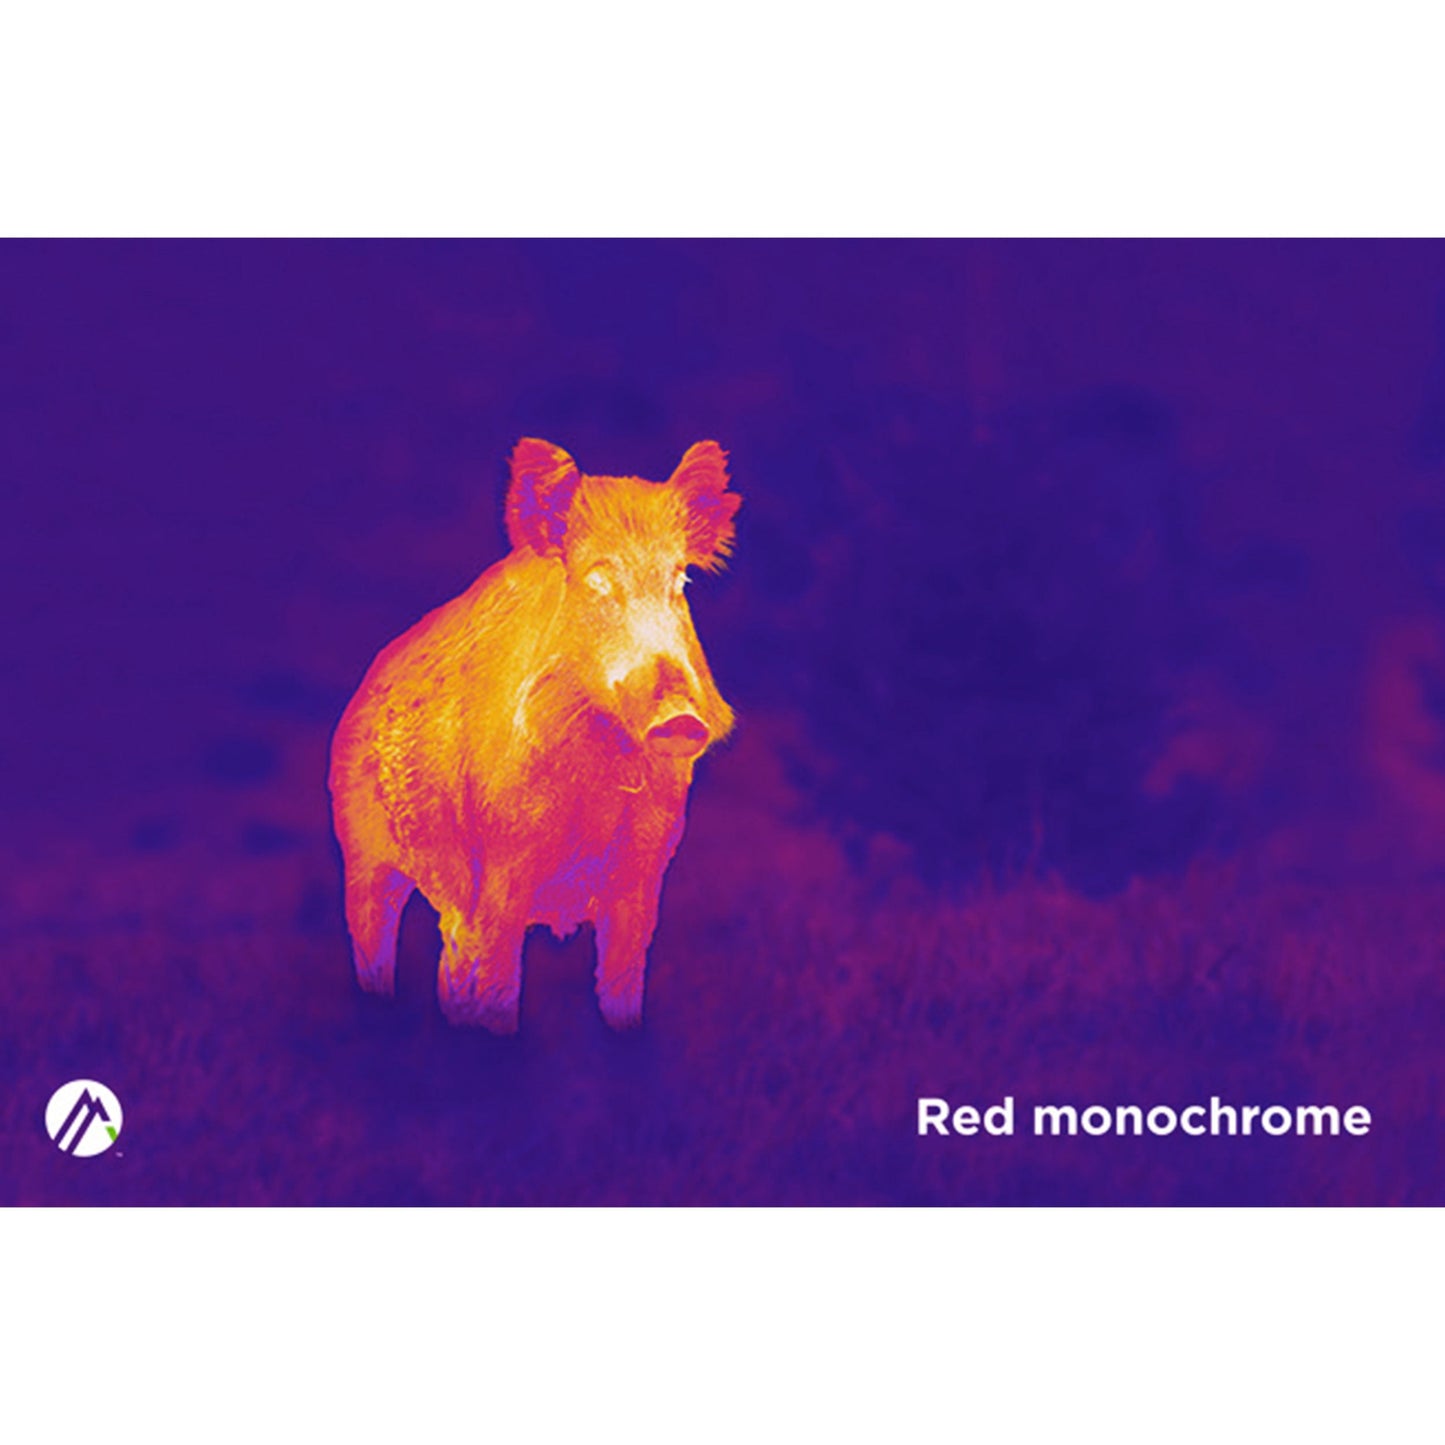 Red monochrome